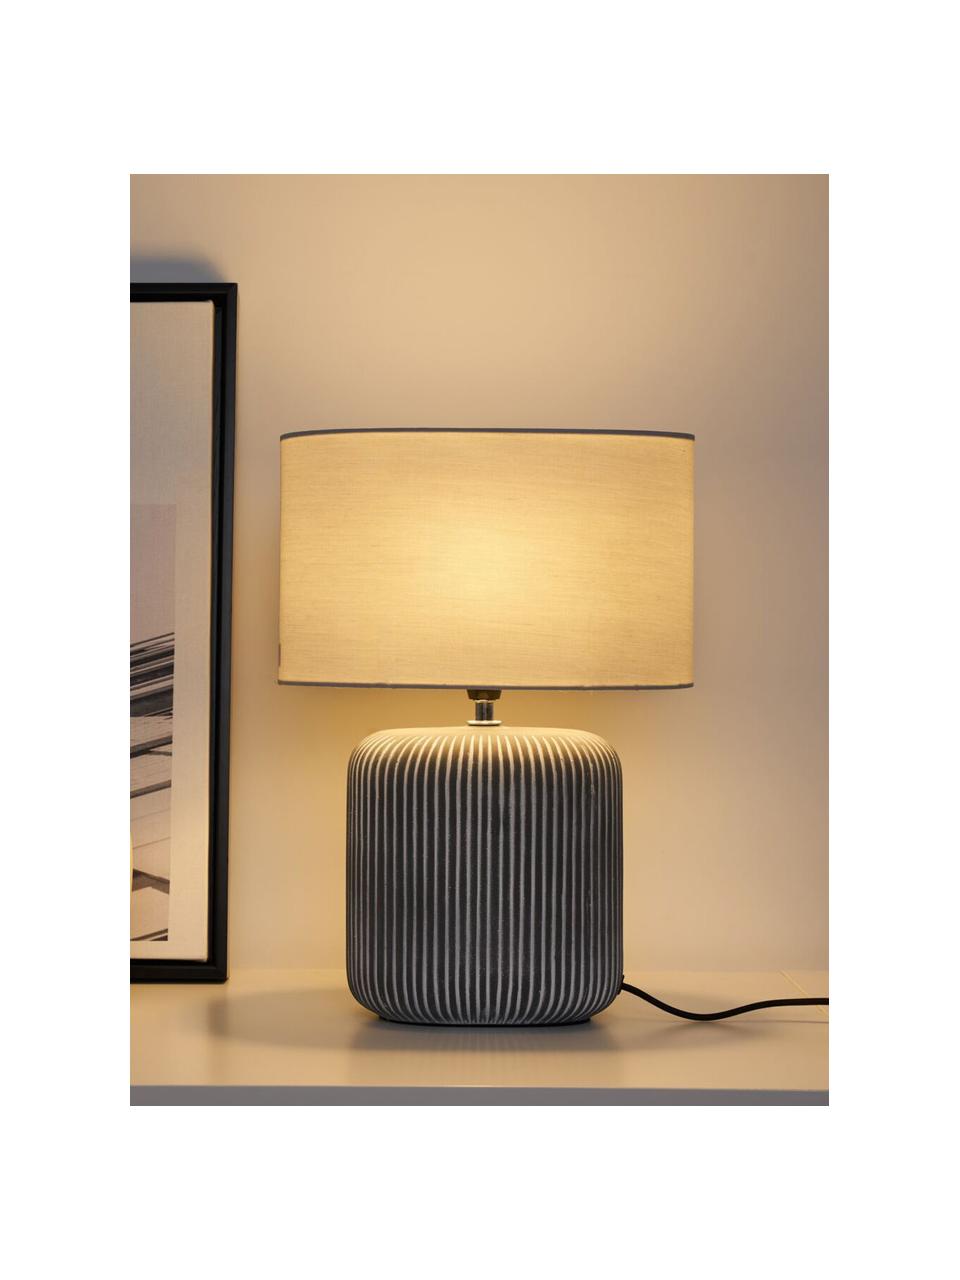 Gestreepte ovale keramische tafellamp Pure Shine, Lampenkap: stof, Lampvoet: keramiek, Wit, grijs, Ø 27 x H 38 cm